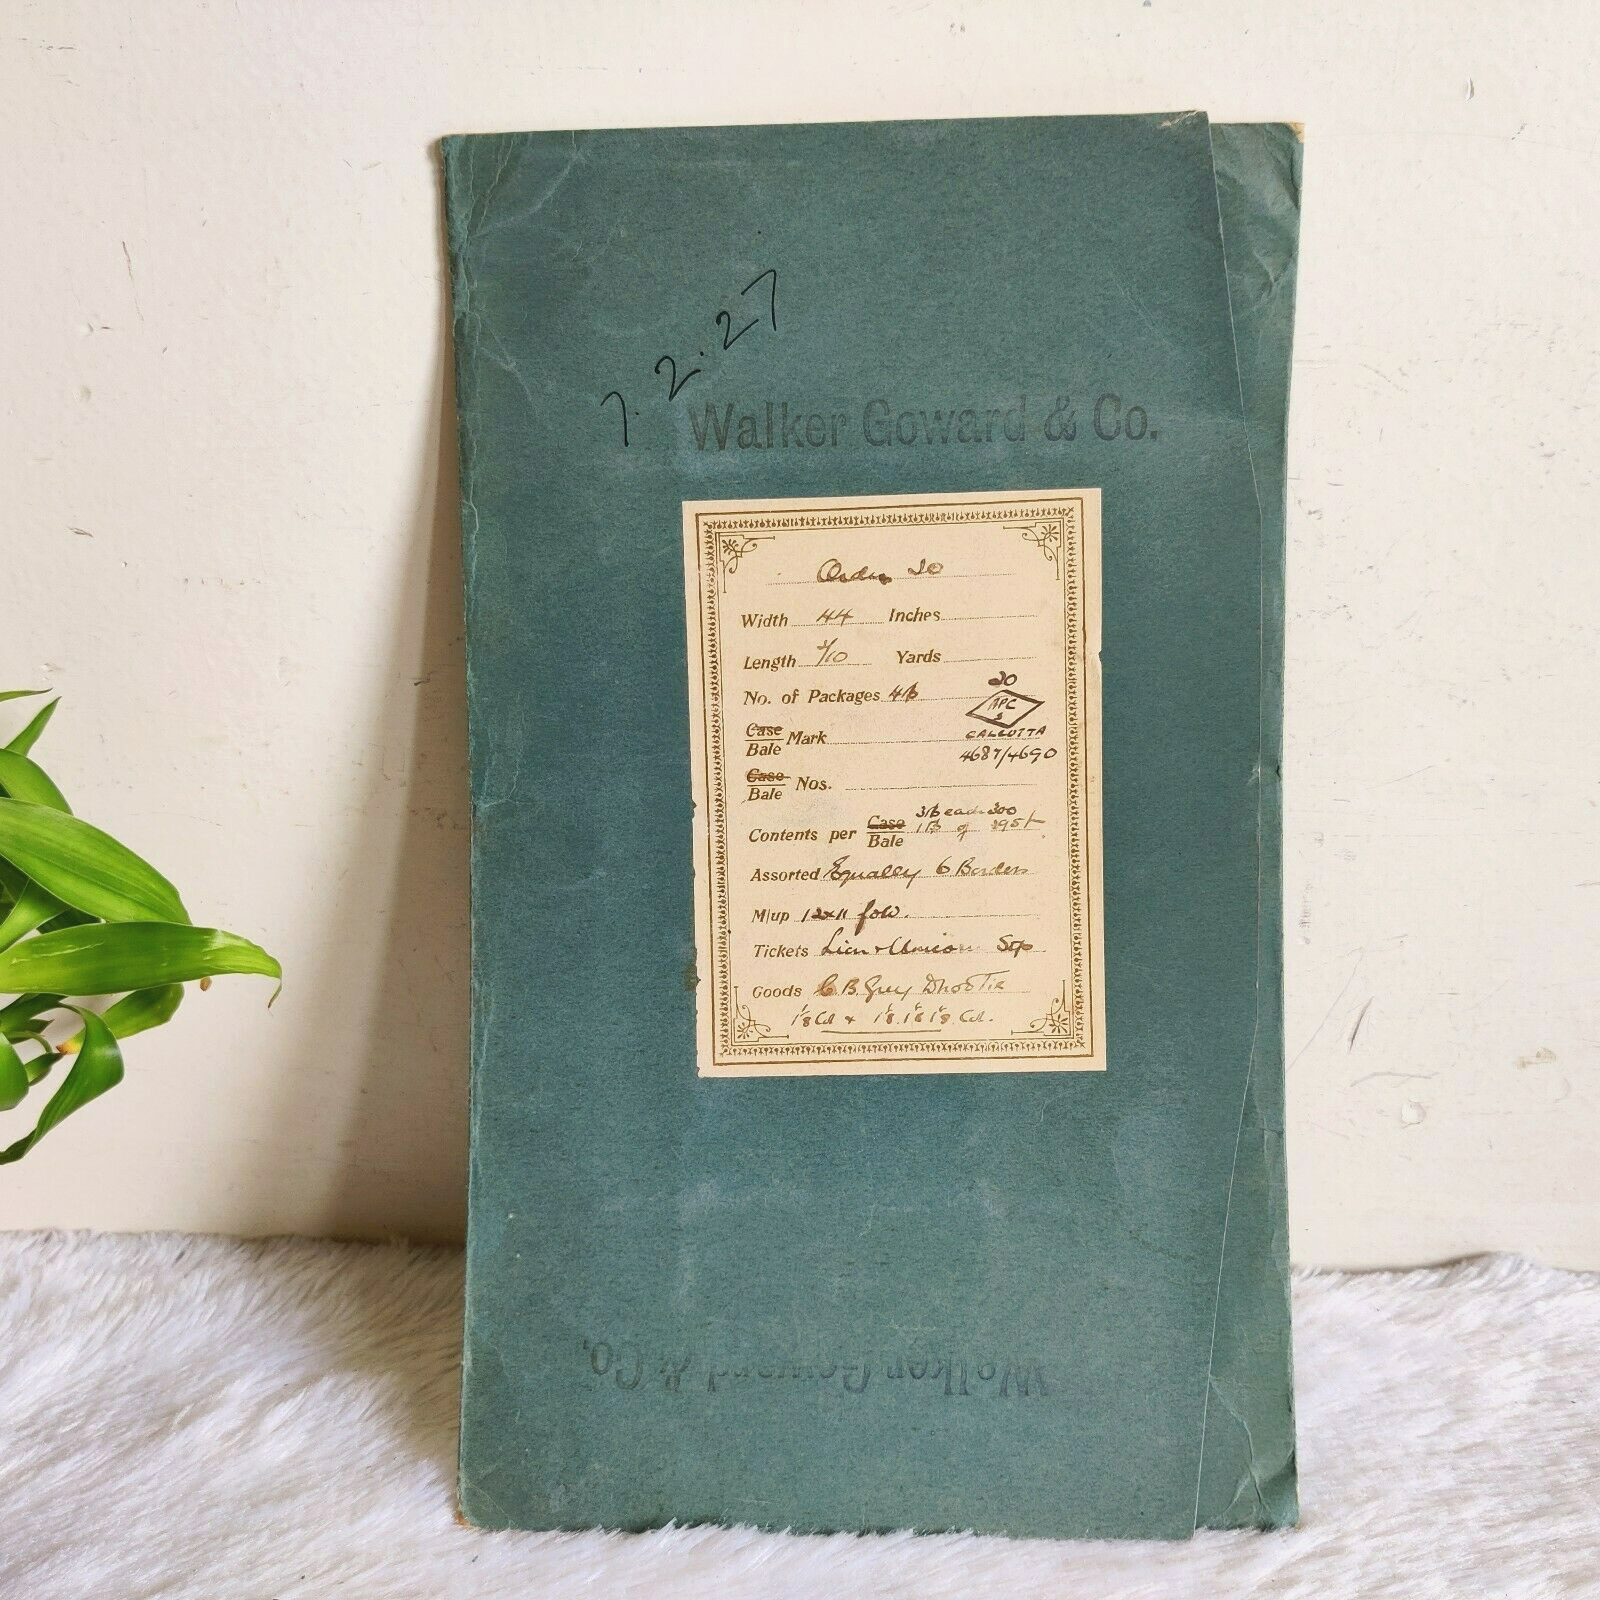 1920s Vintage Walker Goward & Co. Fabric Cloth Catalogue Order Book Rare B91